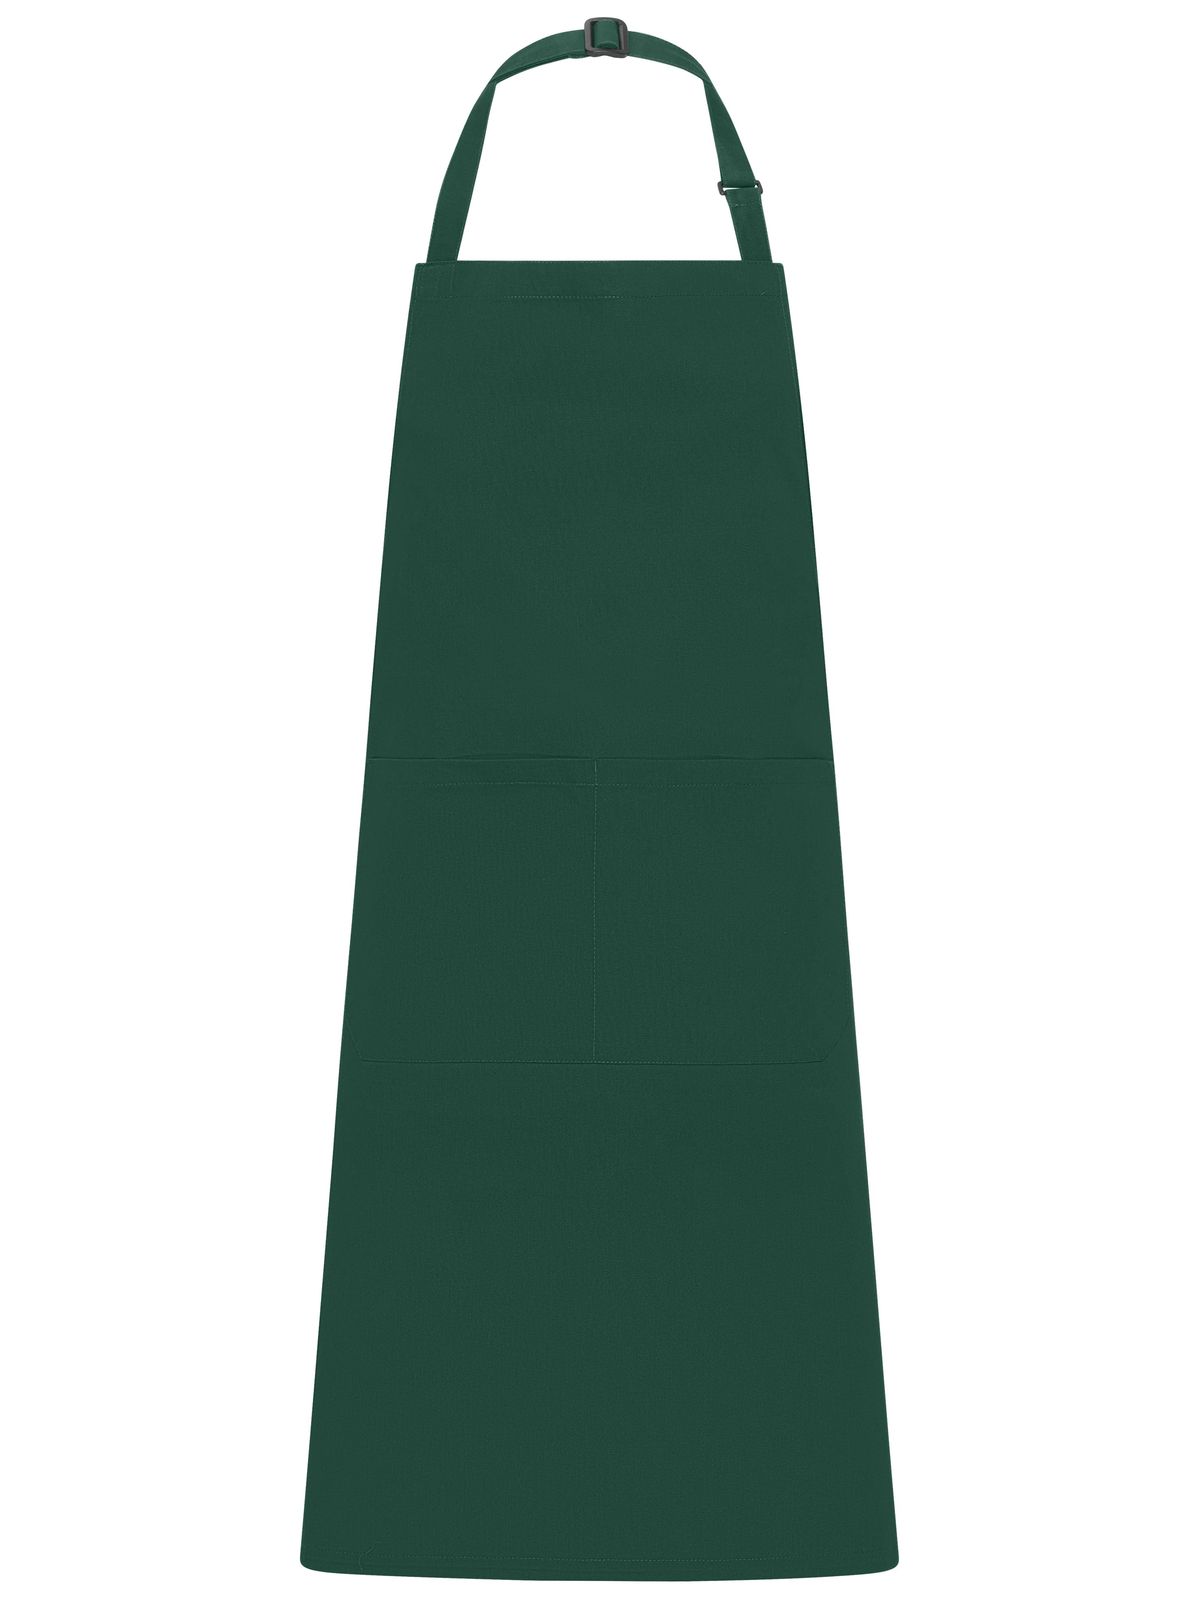 apron-with-bib-dark-green.webp